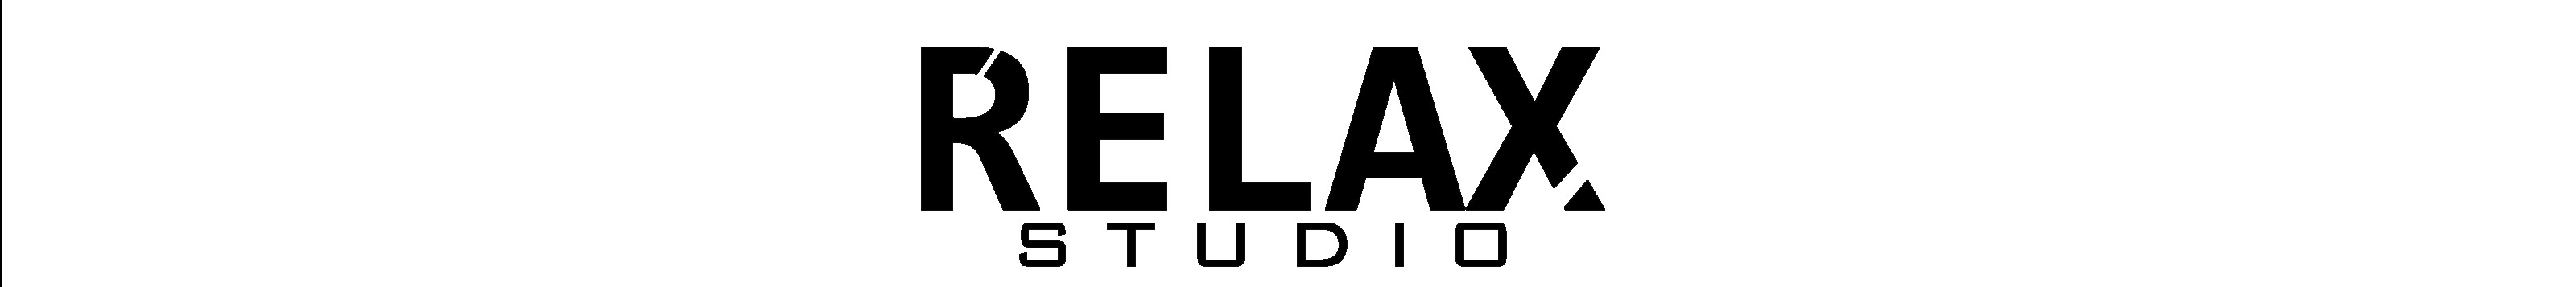 Relax Studios profilbanner